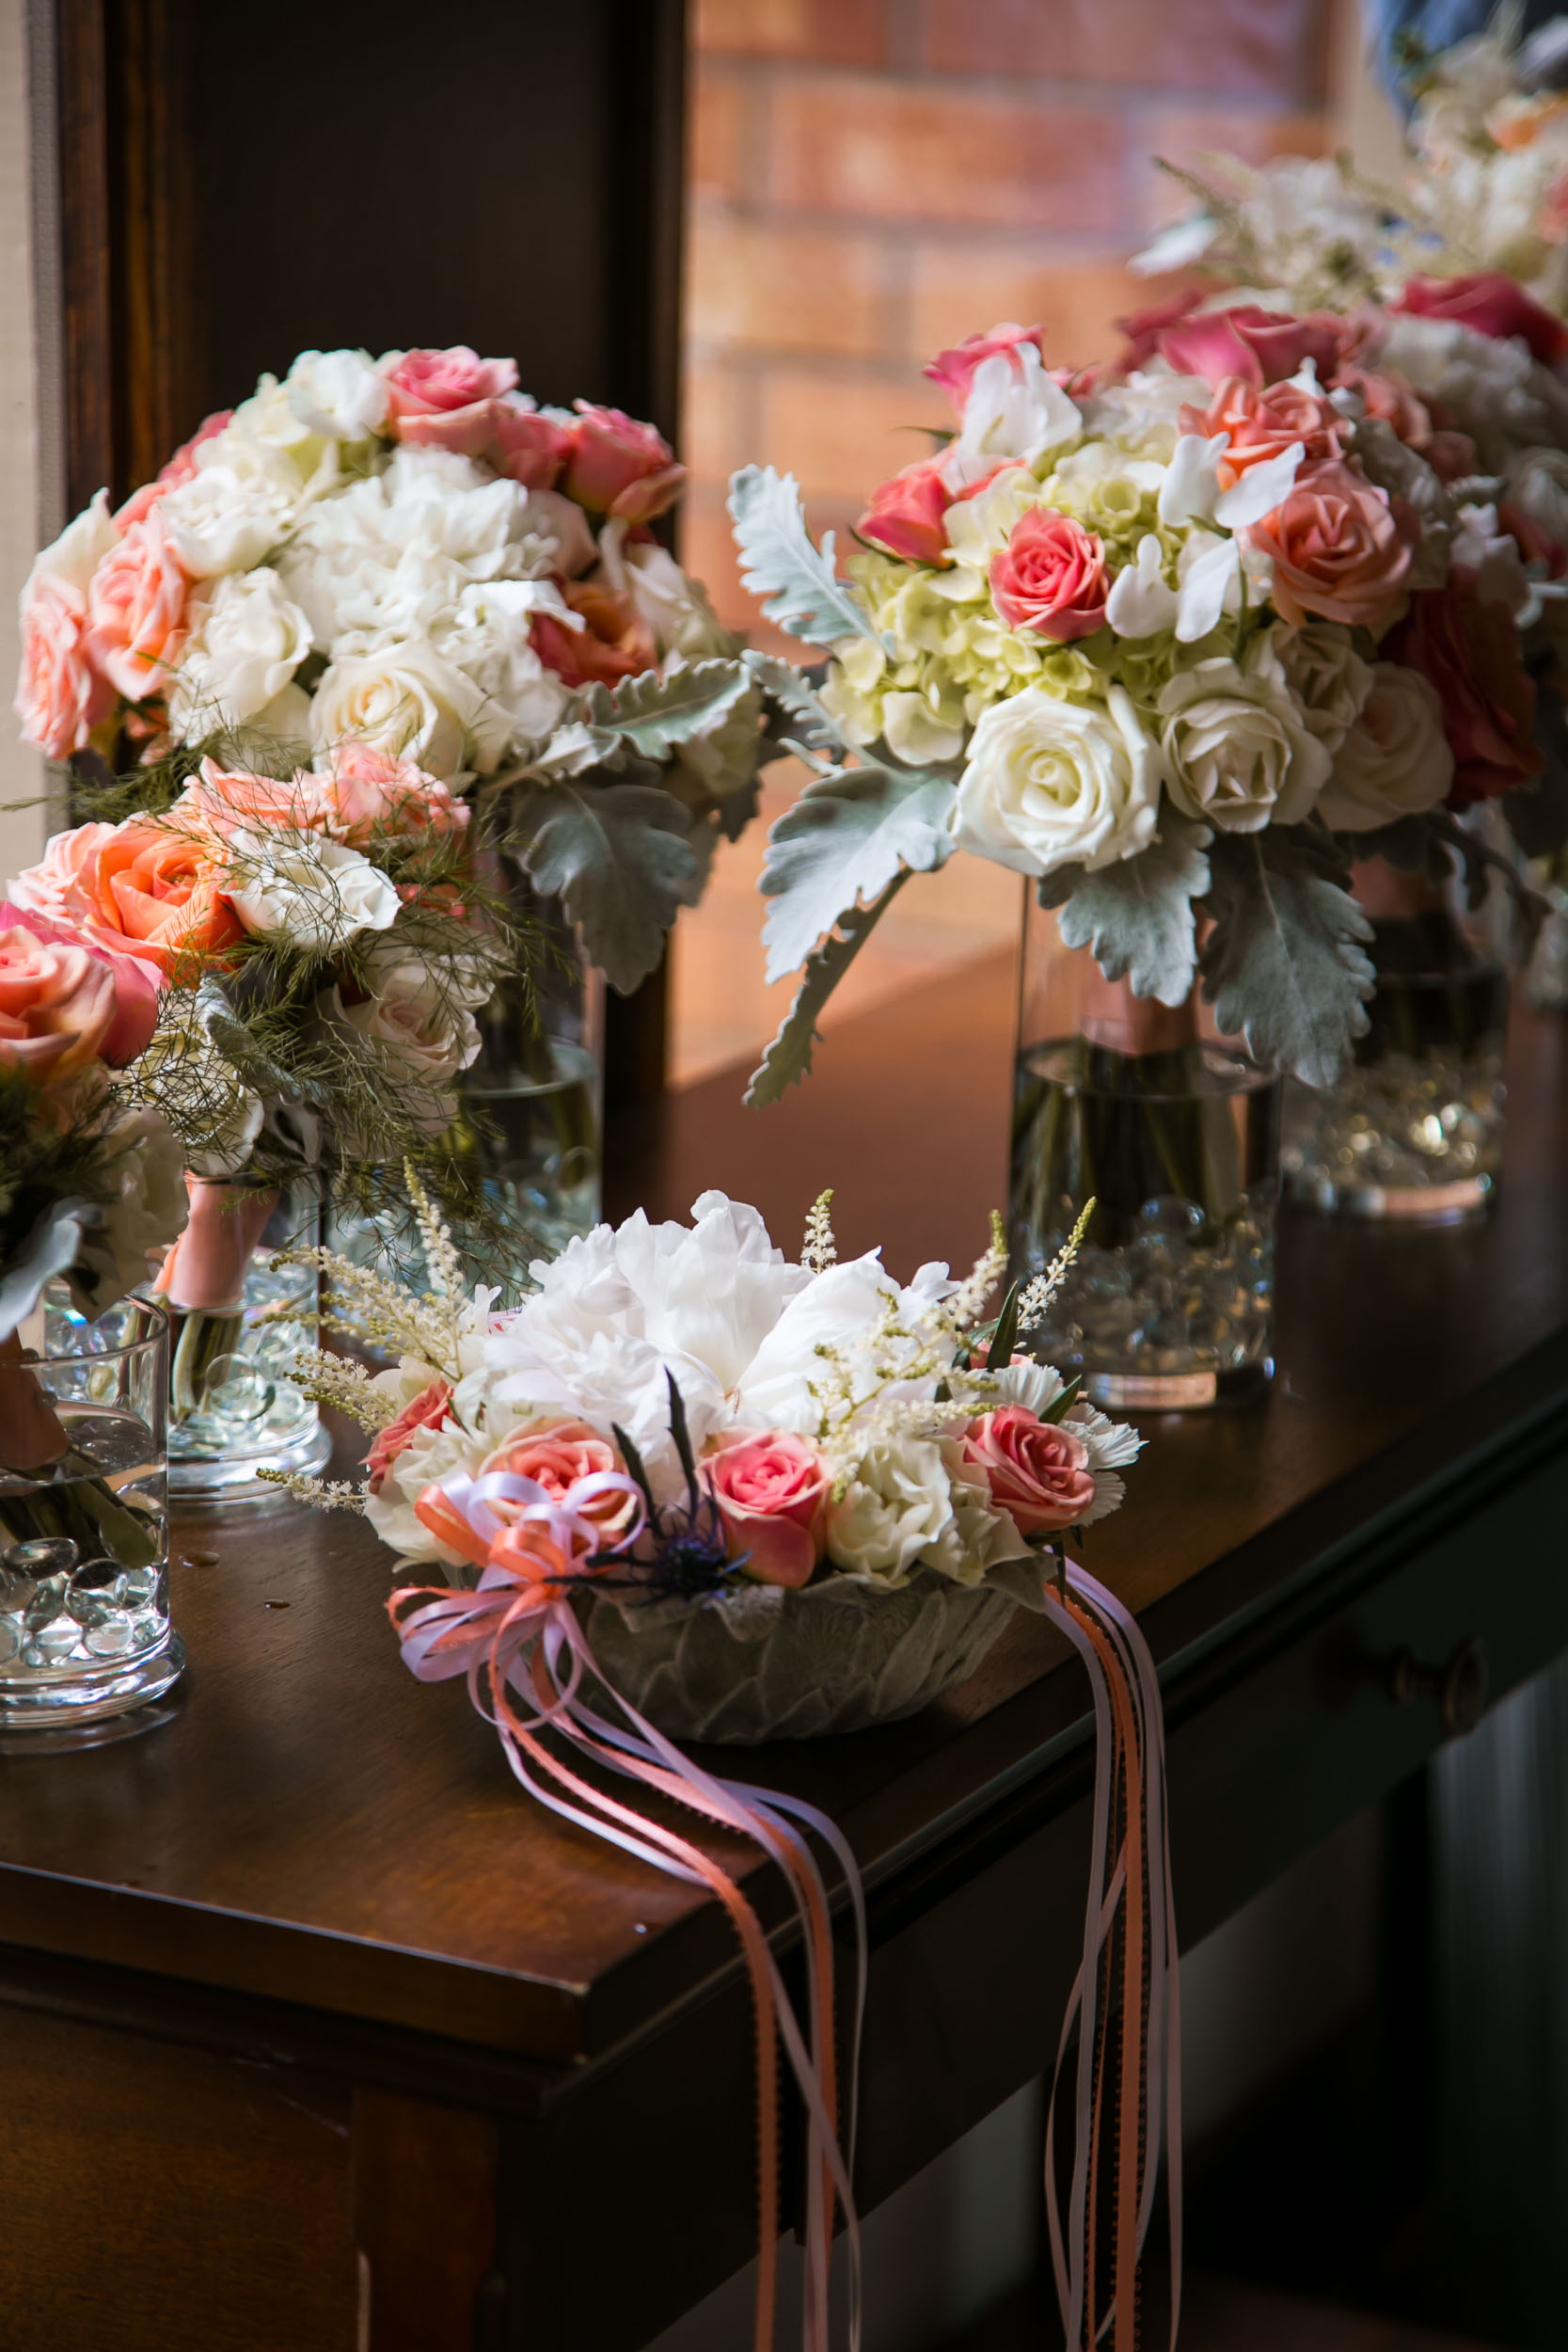 Raleigh Wedding Photographer | G. Lin Photography | Flower arrangement on table at church